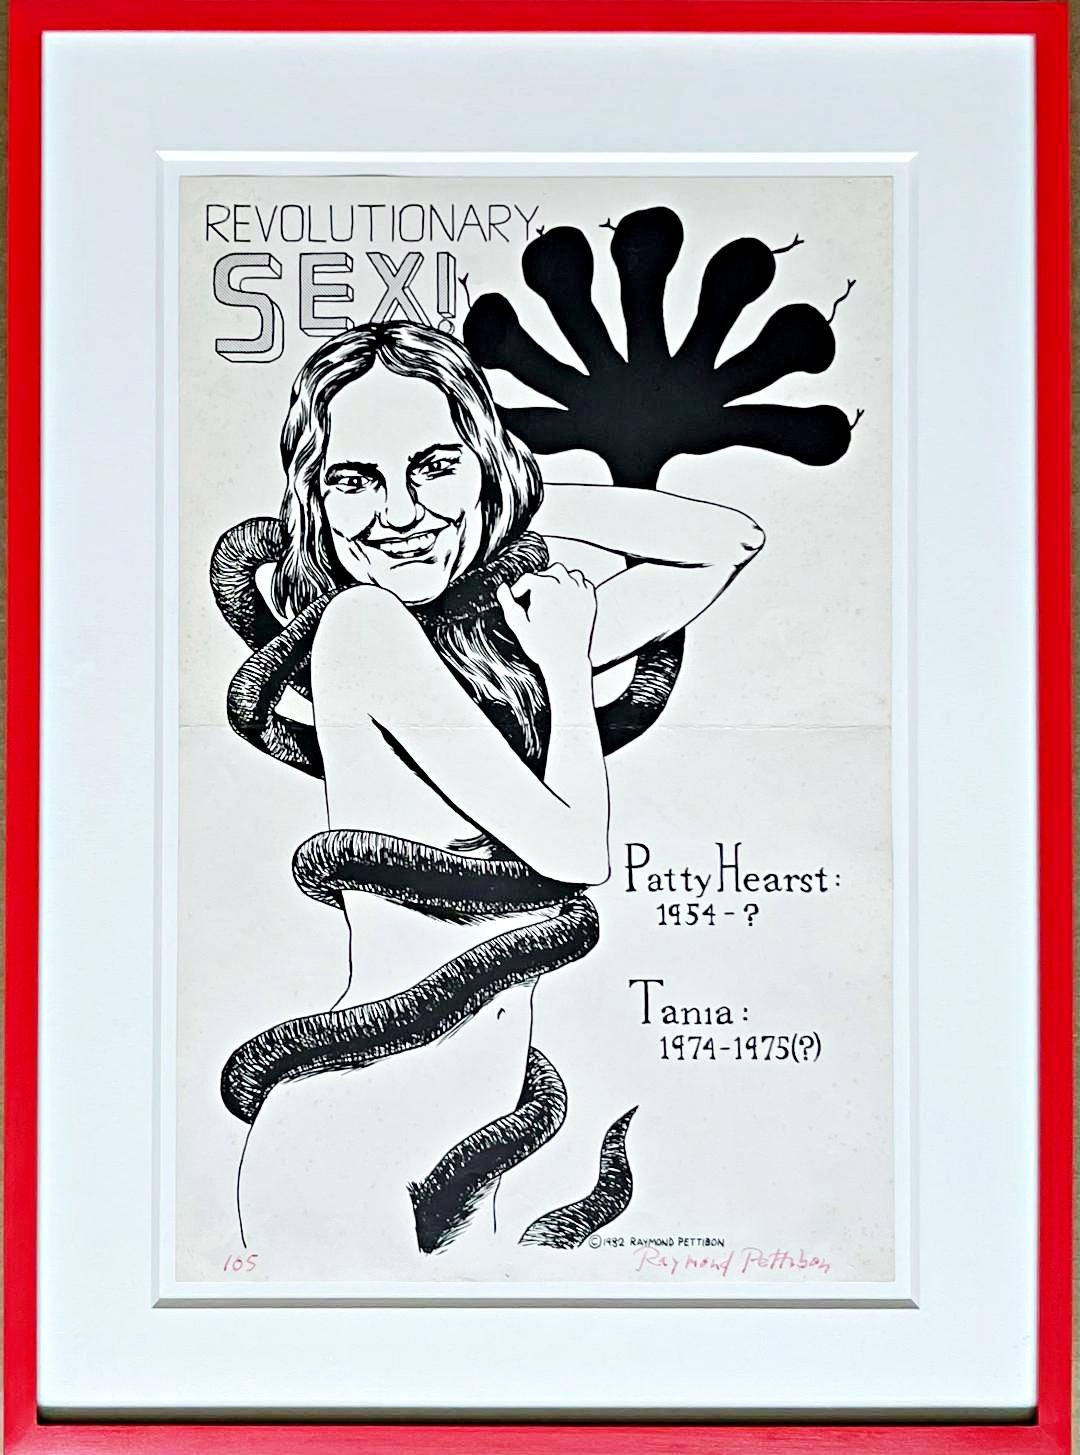 Raymond Pettibon Nude Print - Revolutionary Sex (Deluxe hand signed edition of the Patty Hearst SLA Poster)